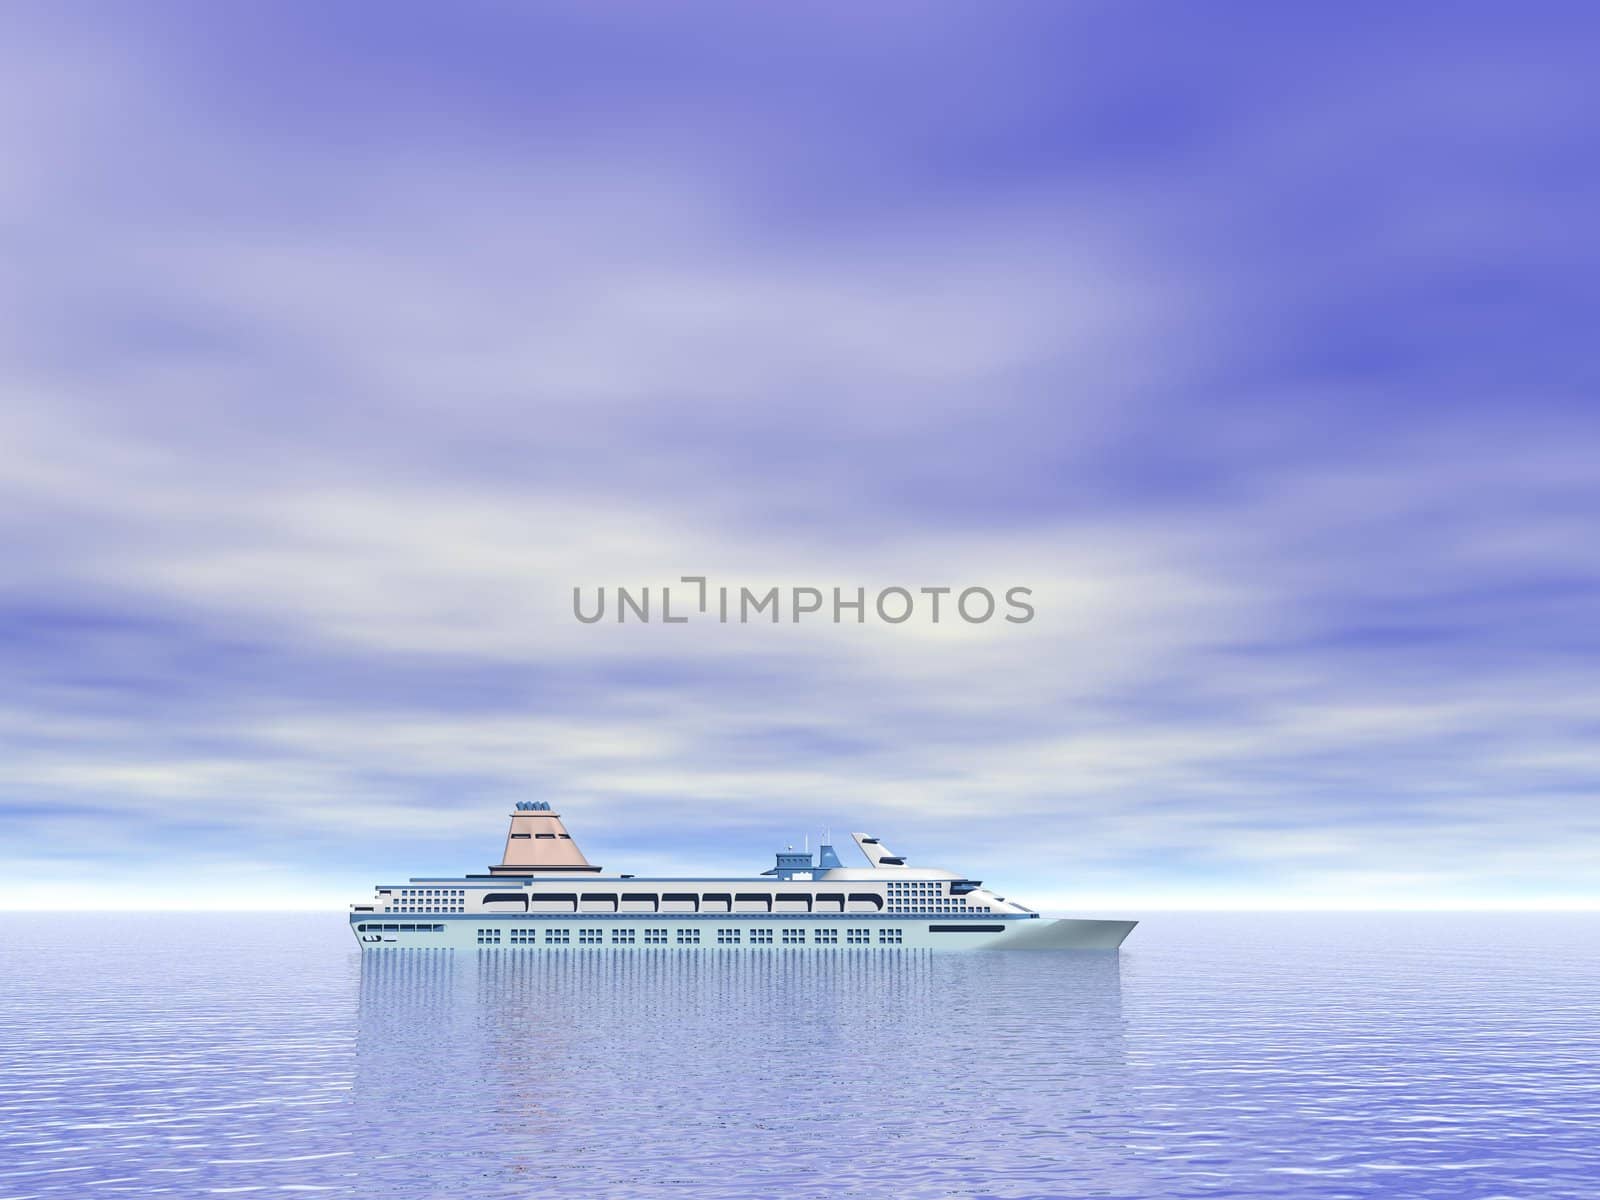 Cruise ship on the ocean - 3D render by Elenaphotos21